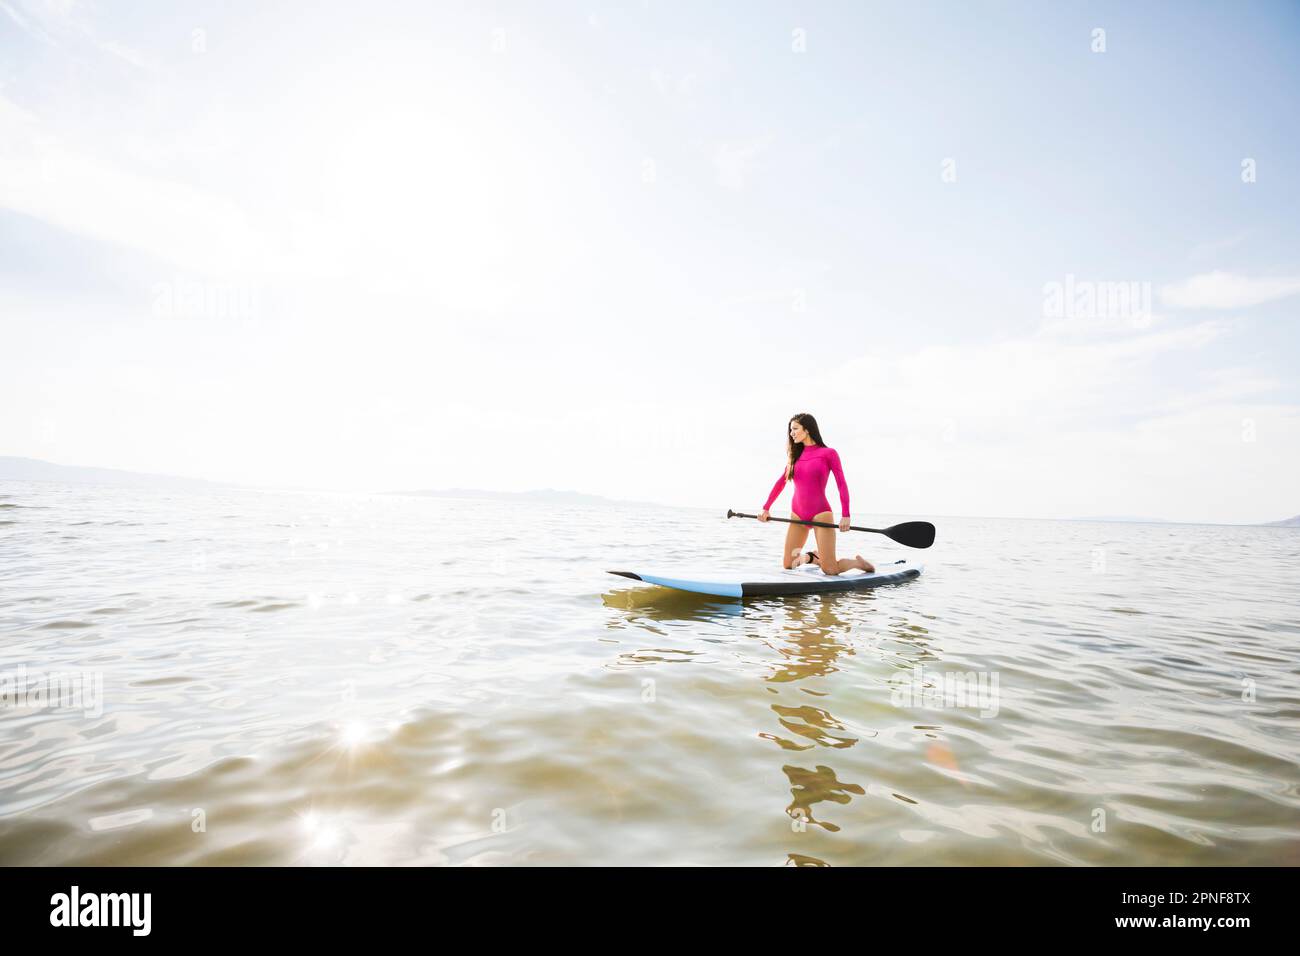 Woman kneeling on paddleboar in lake Stock Photo